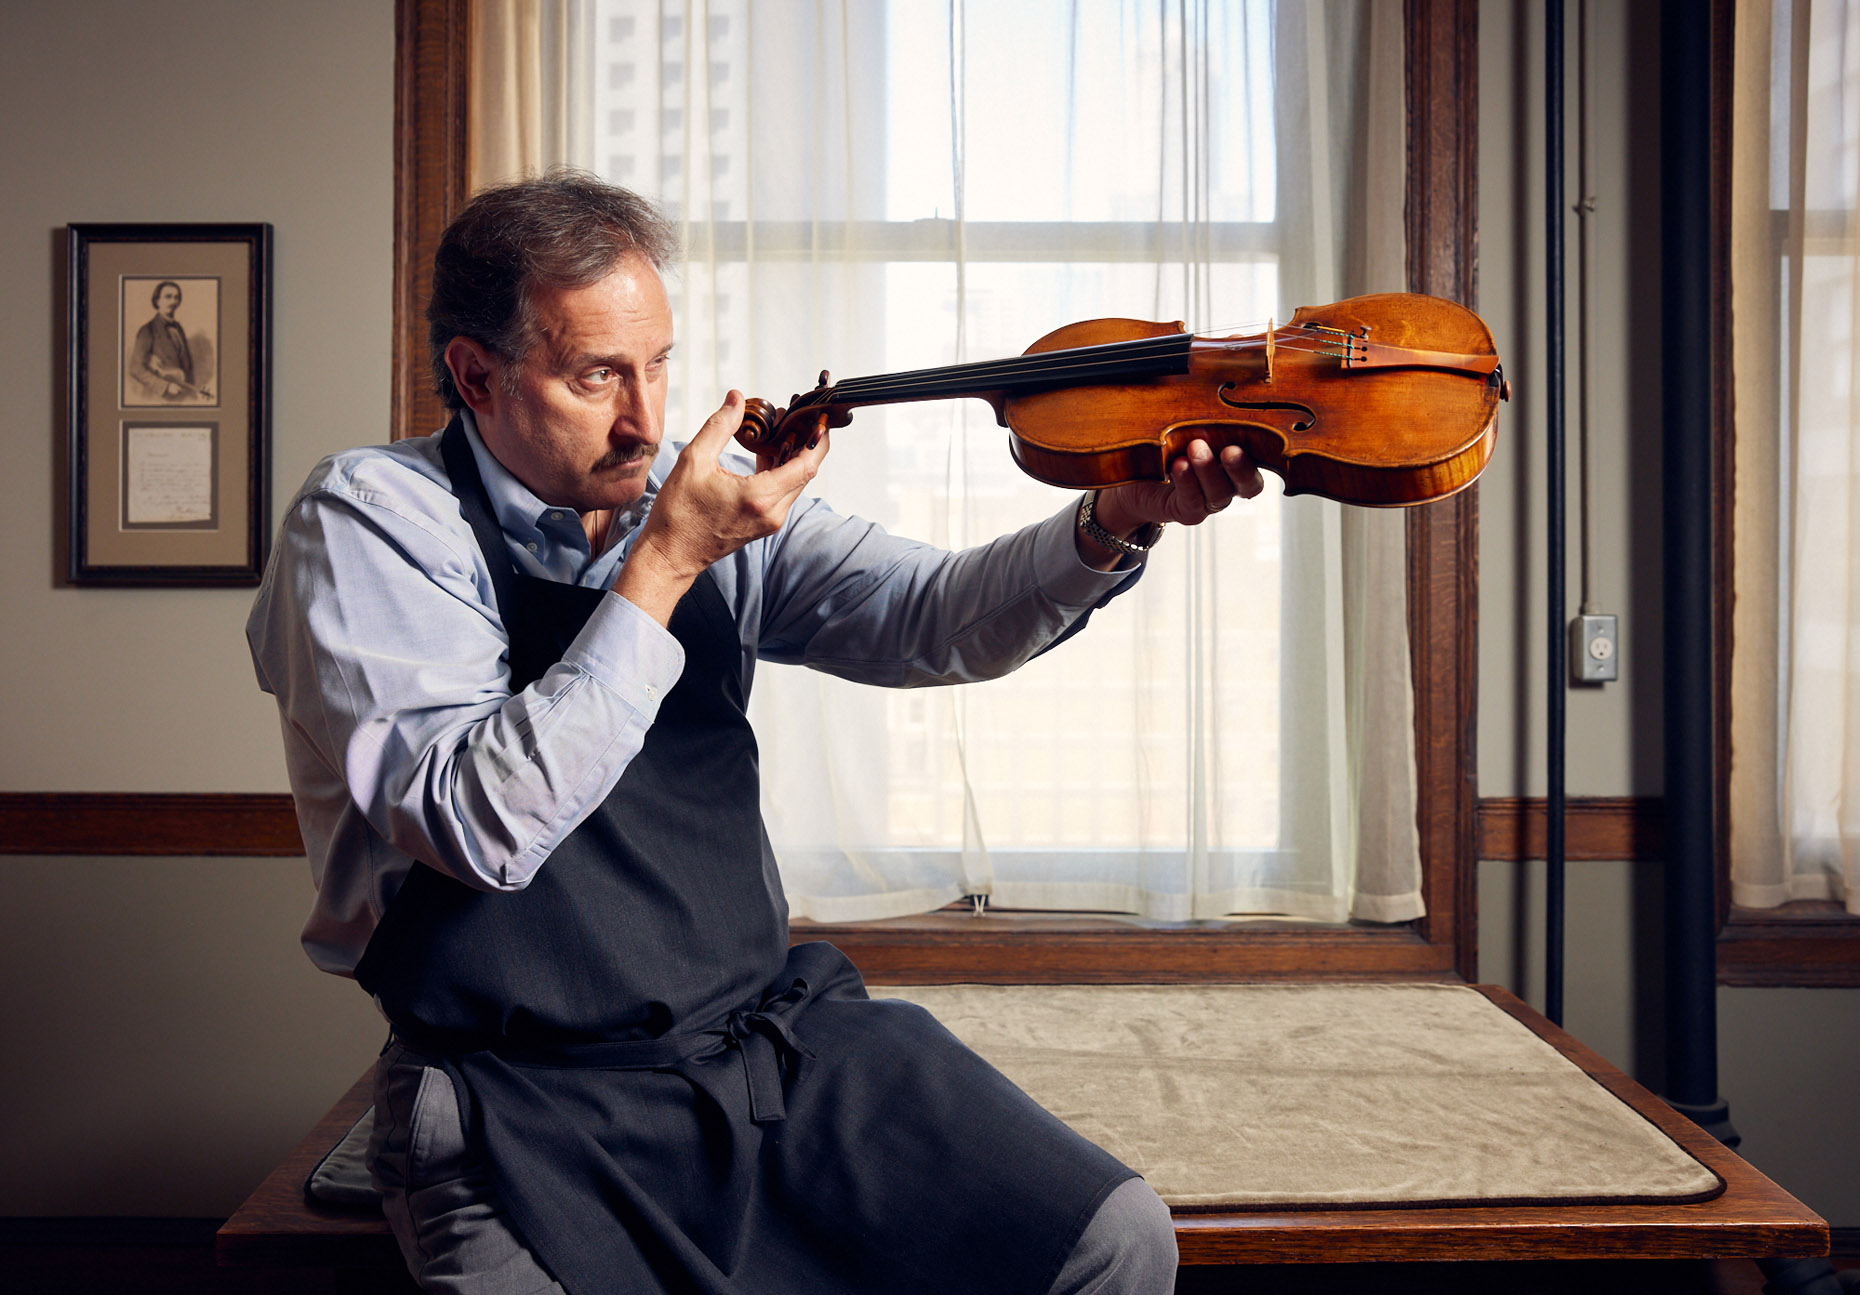 John Becker violin repair studio | lifestyle photography by Saverio Truglia